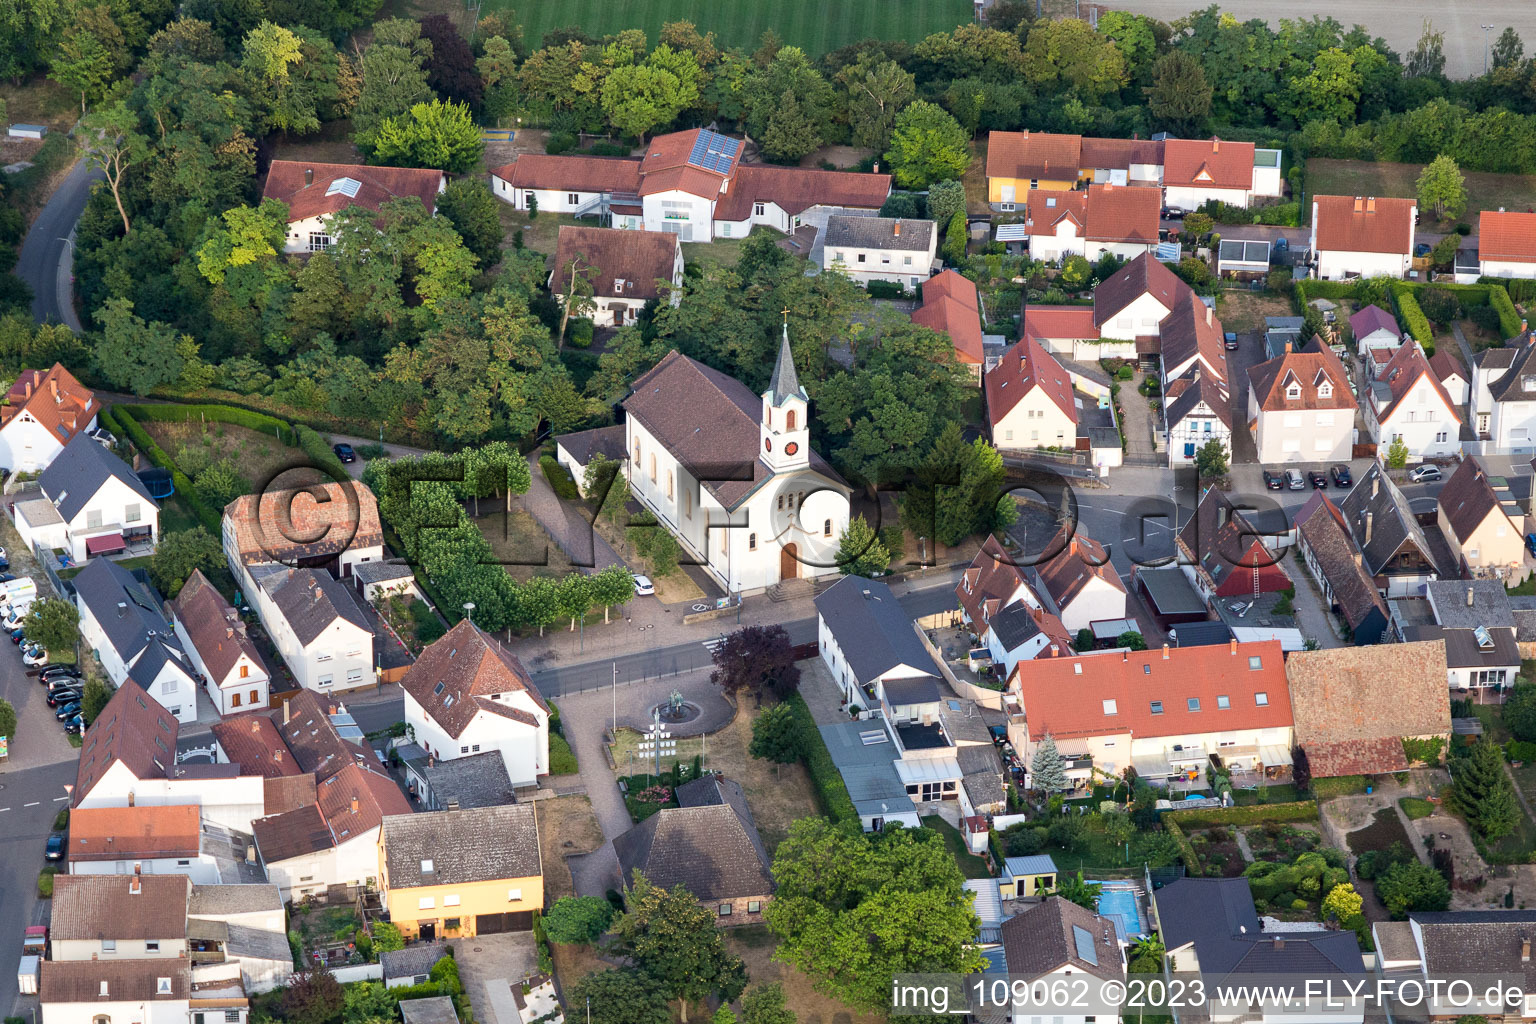 Pankratius Church in the district Berghausen in Römerberg in the state Rhineland-Palatinate, Germany